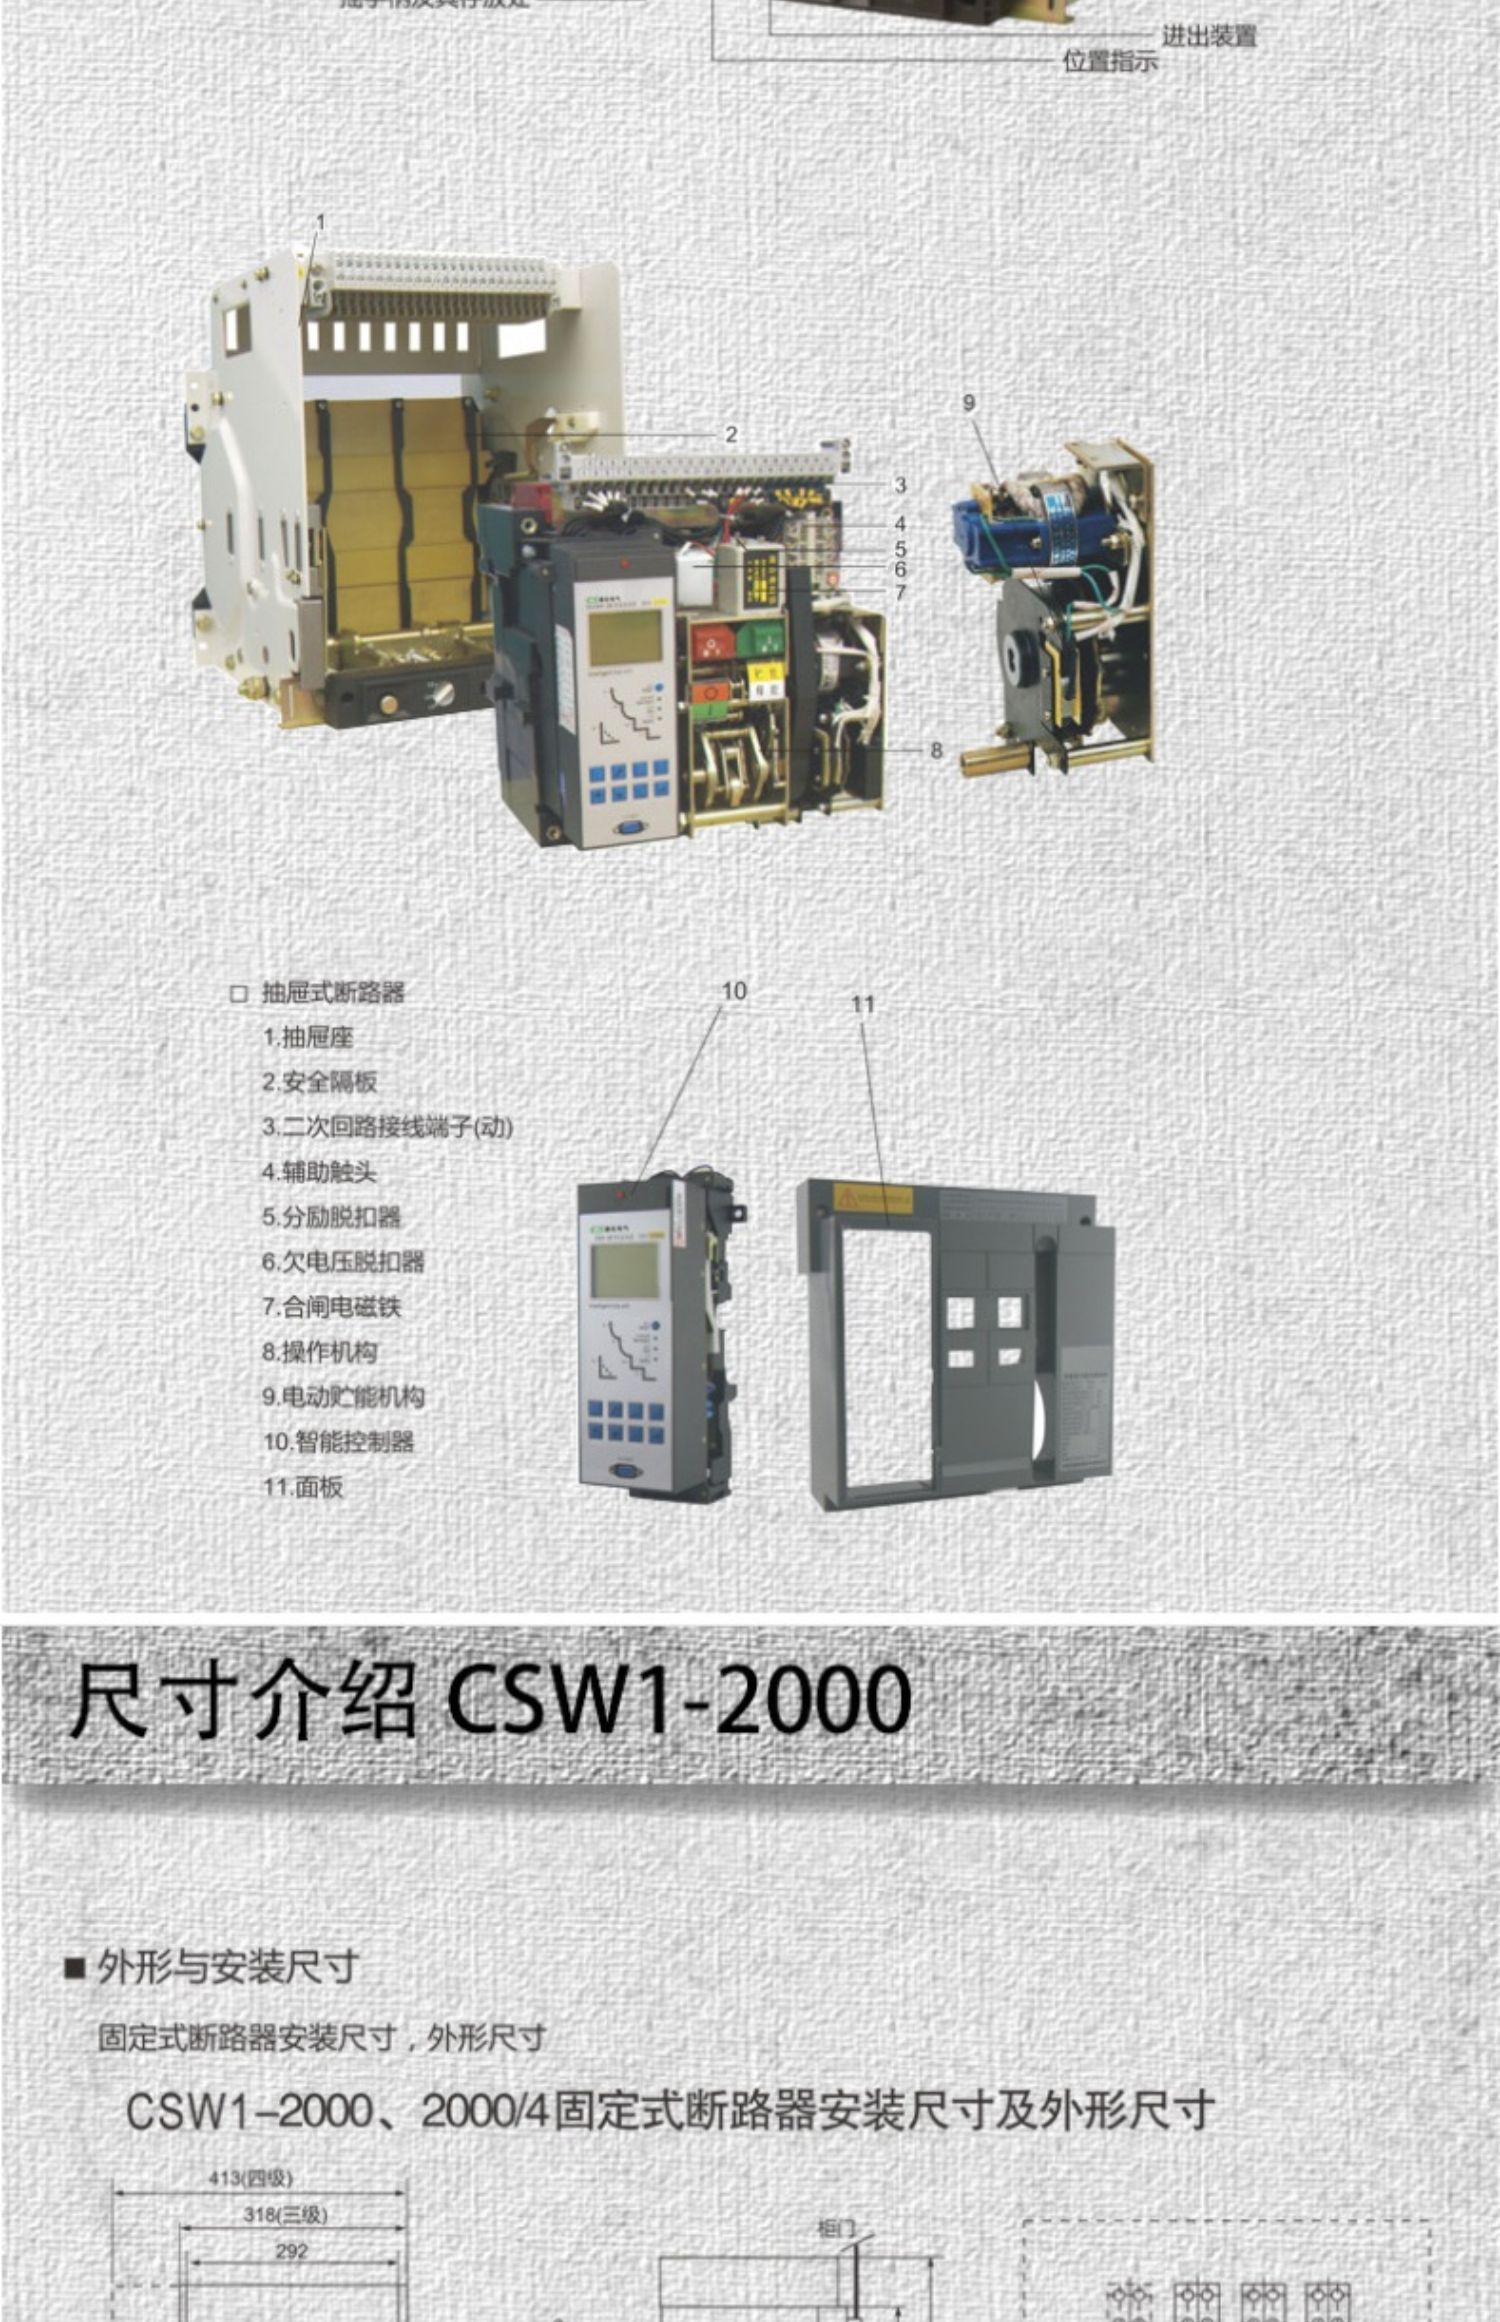 ˮһʽ·GSW1-2000/3 1000A 1250A 1600A